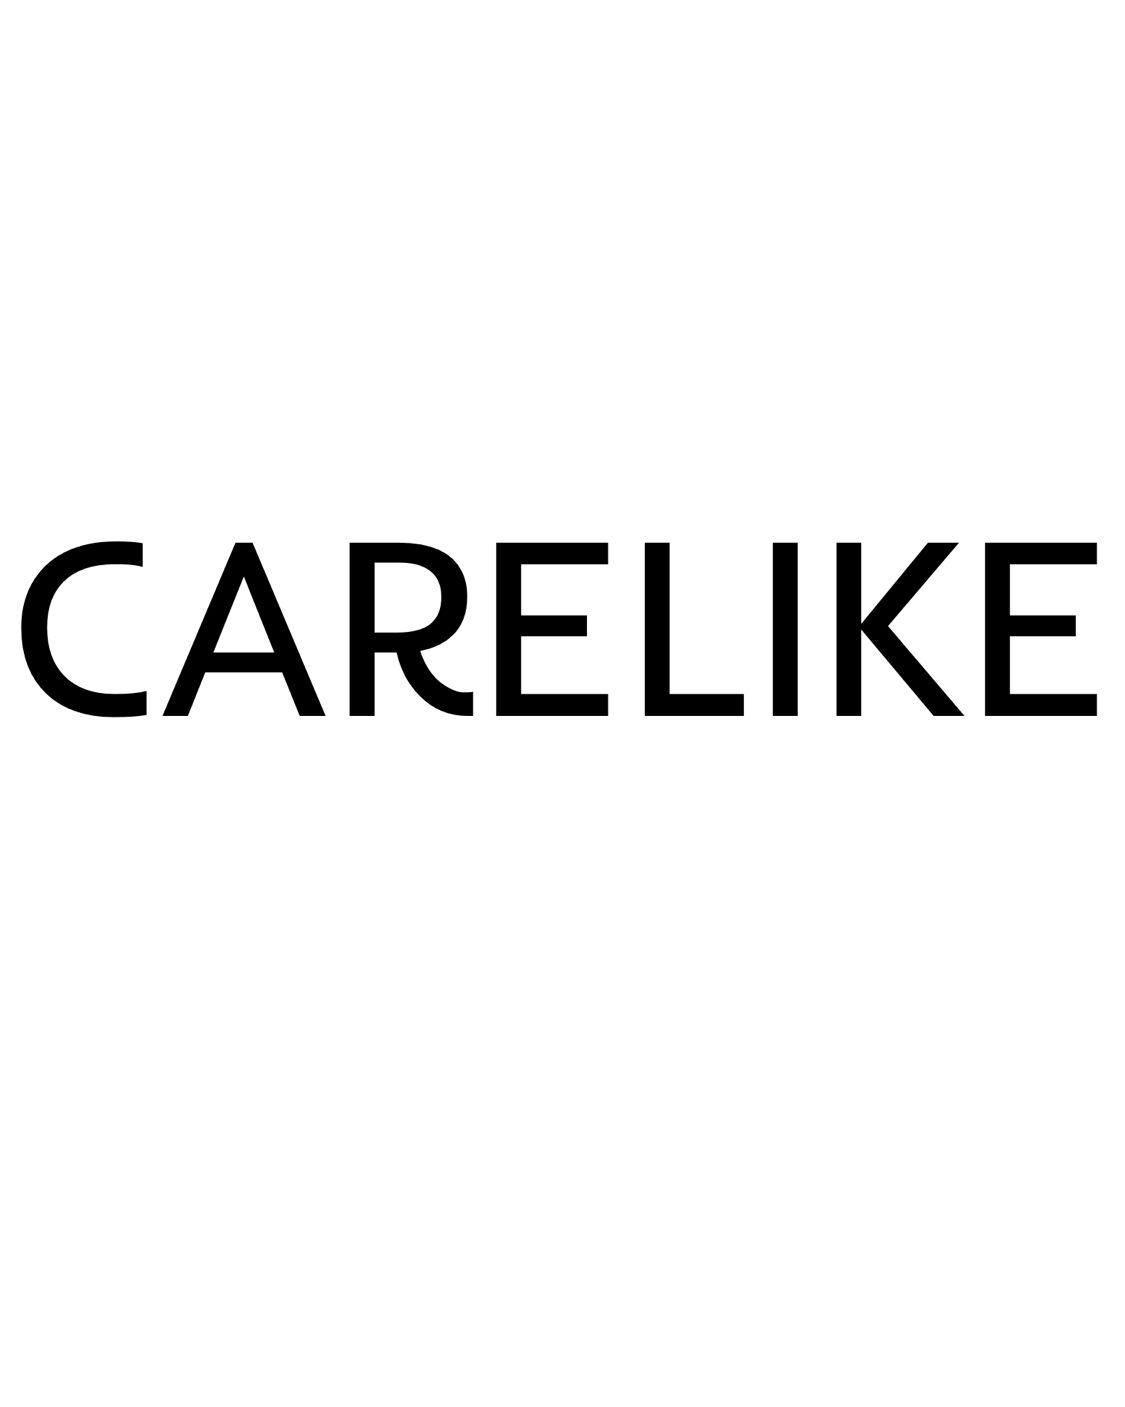 CARELIKE